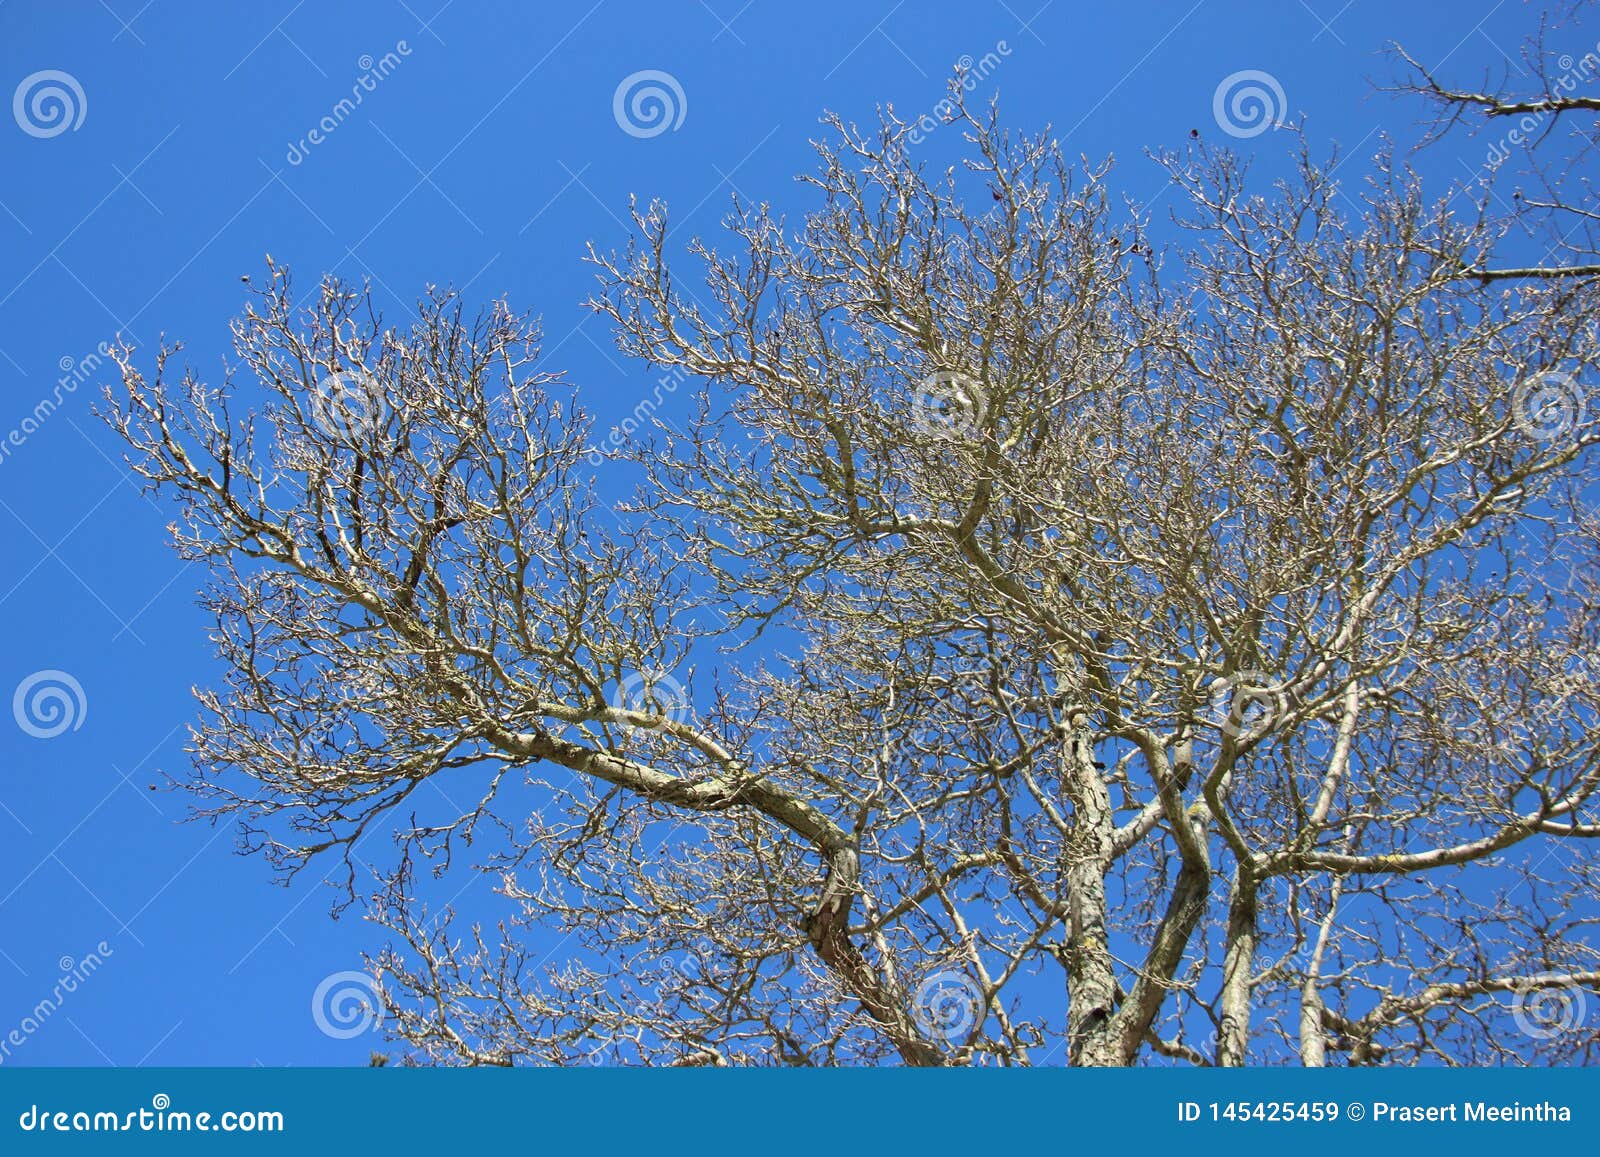 leafless tree in springtime